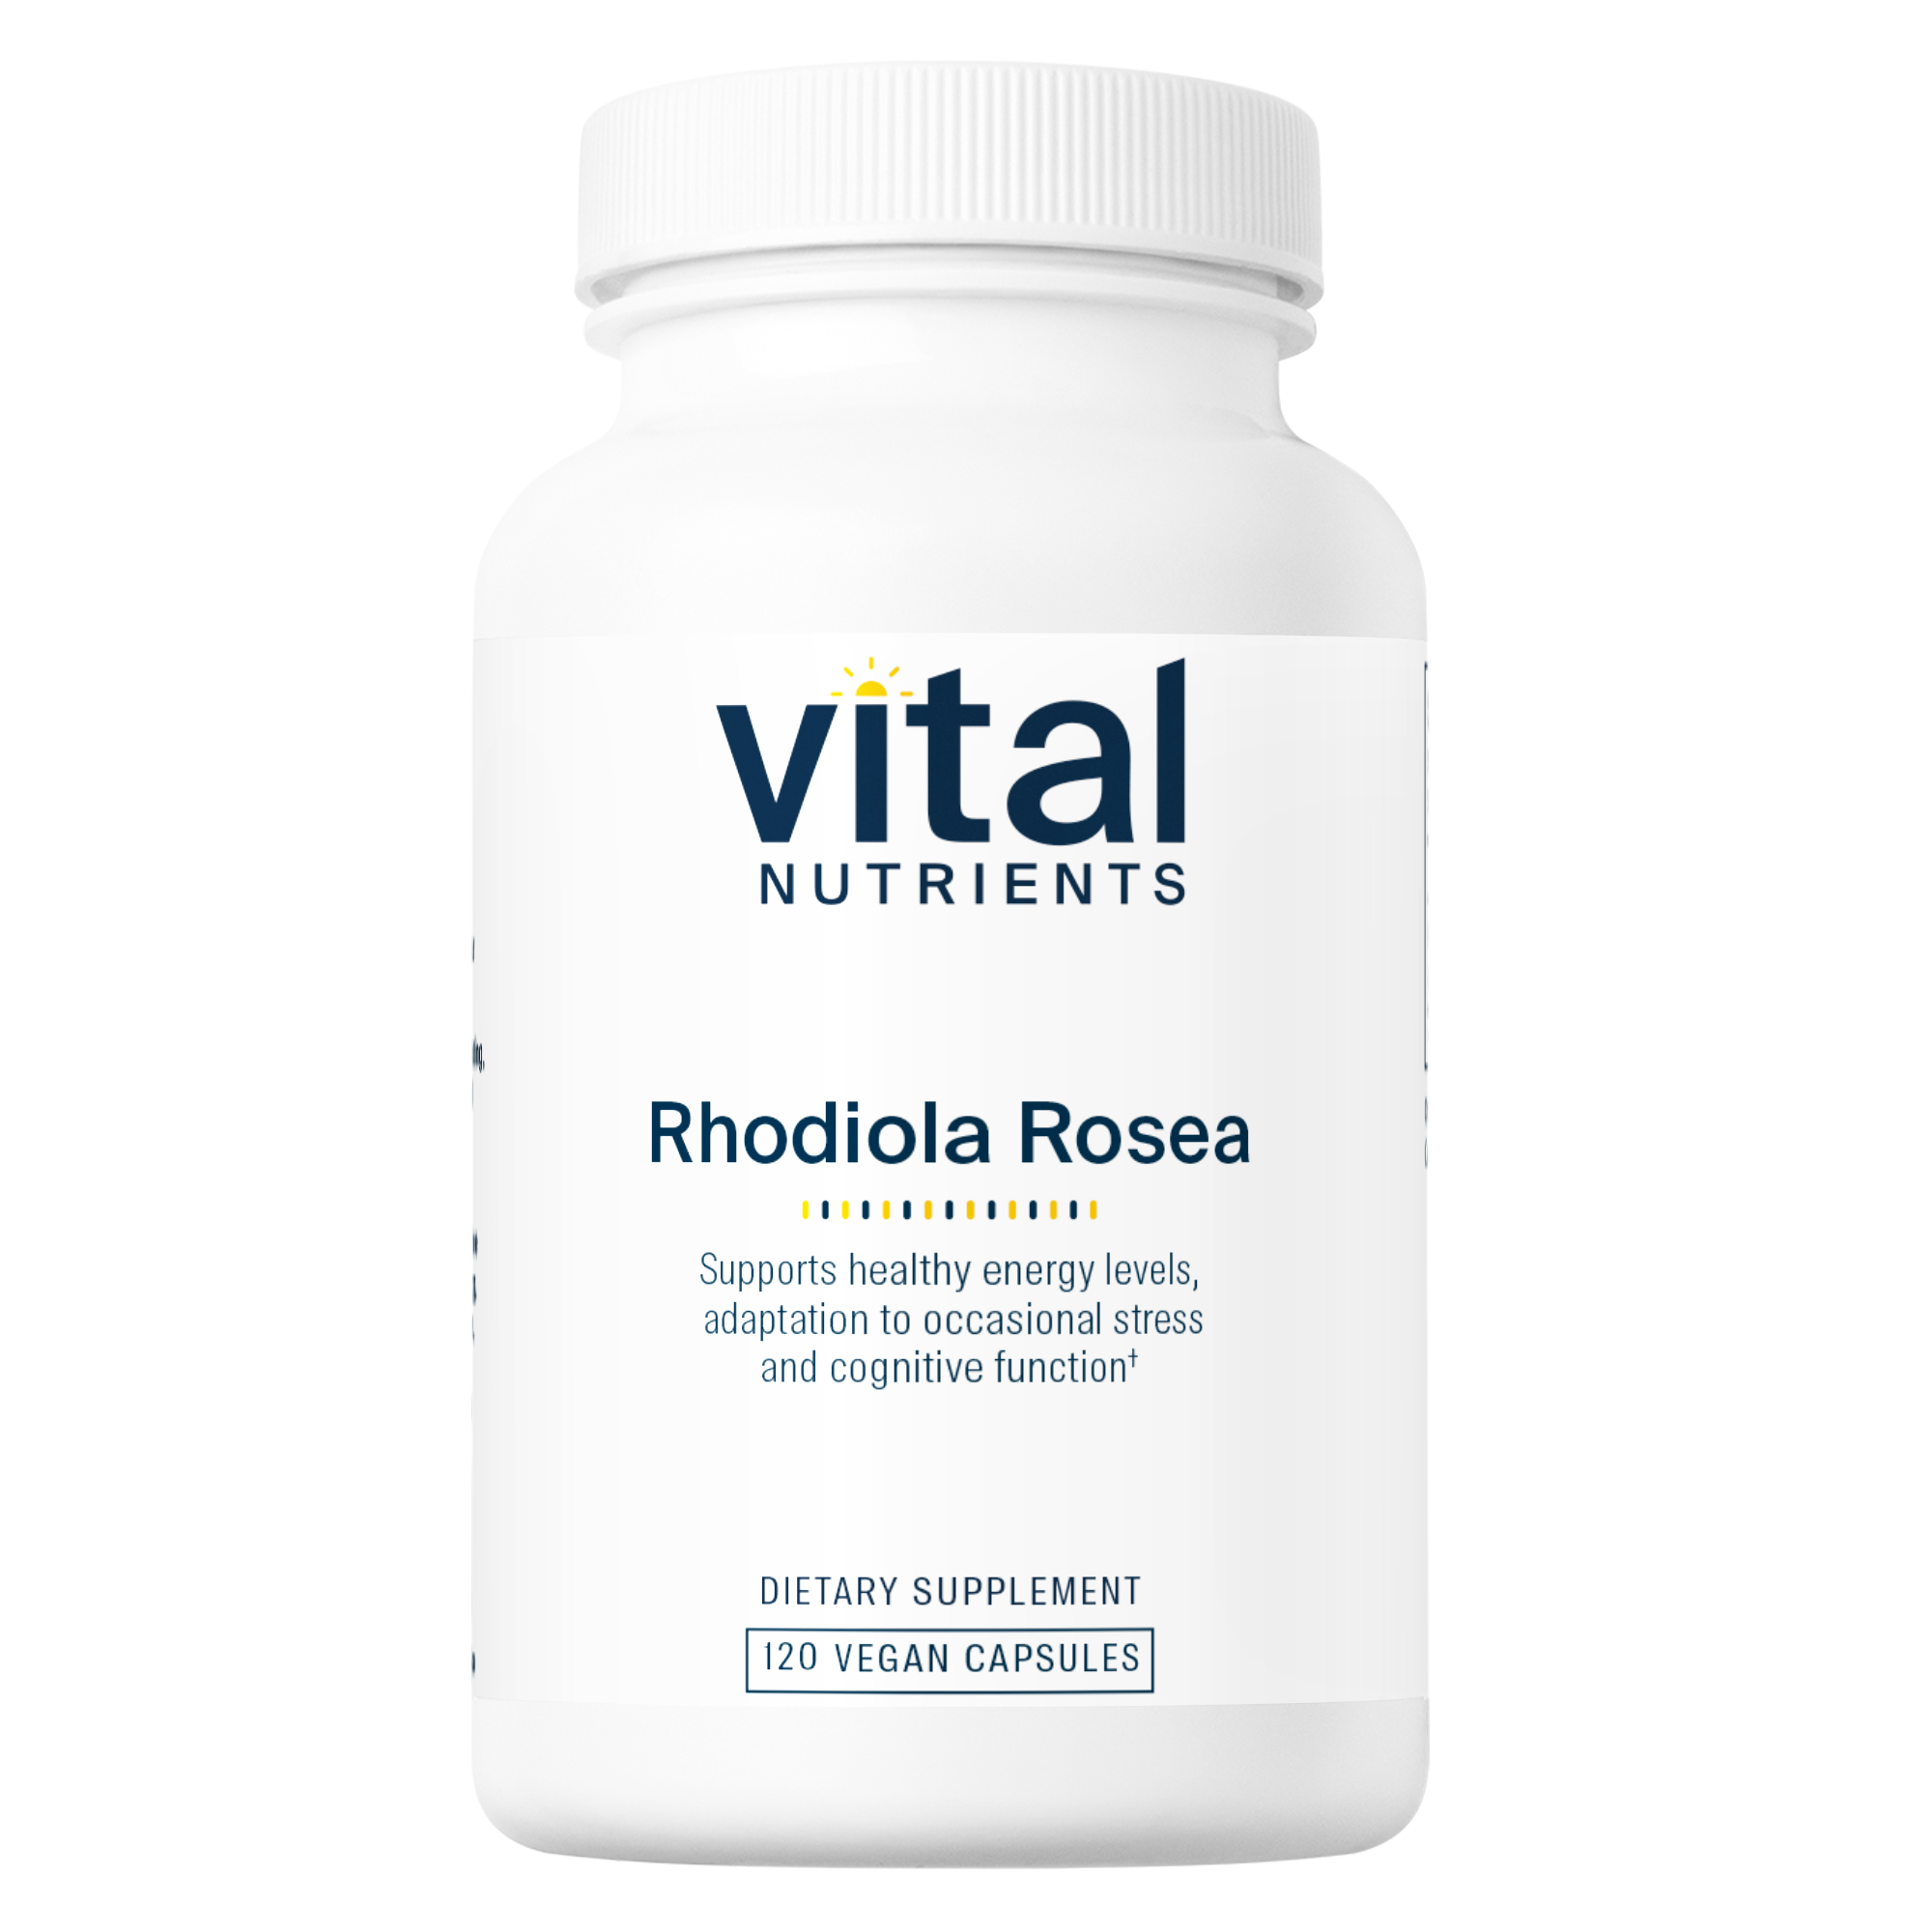 Rhodiola rosea 3% Standardized Extract